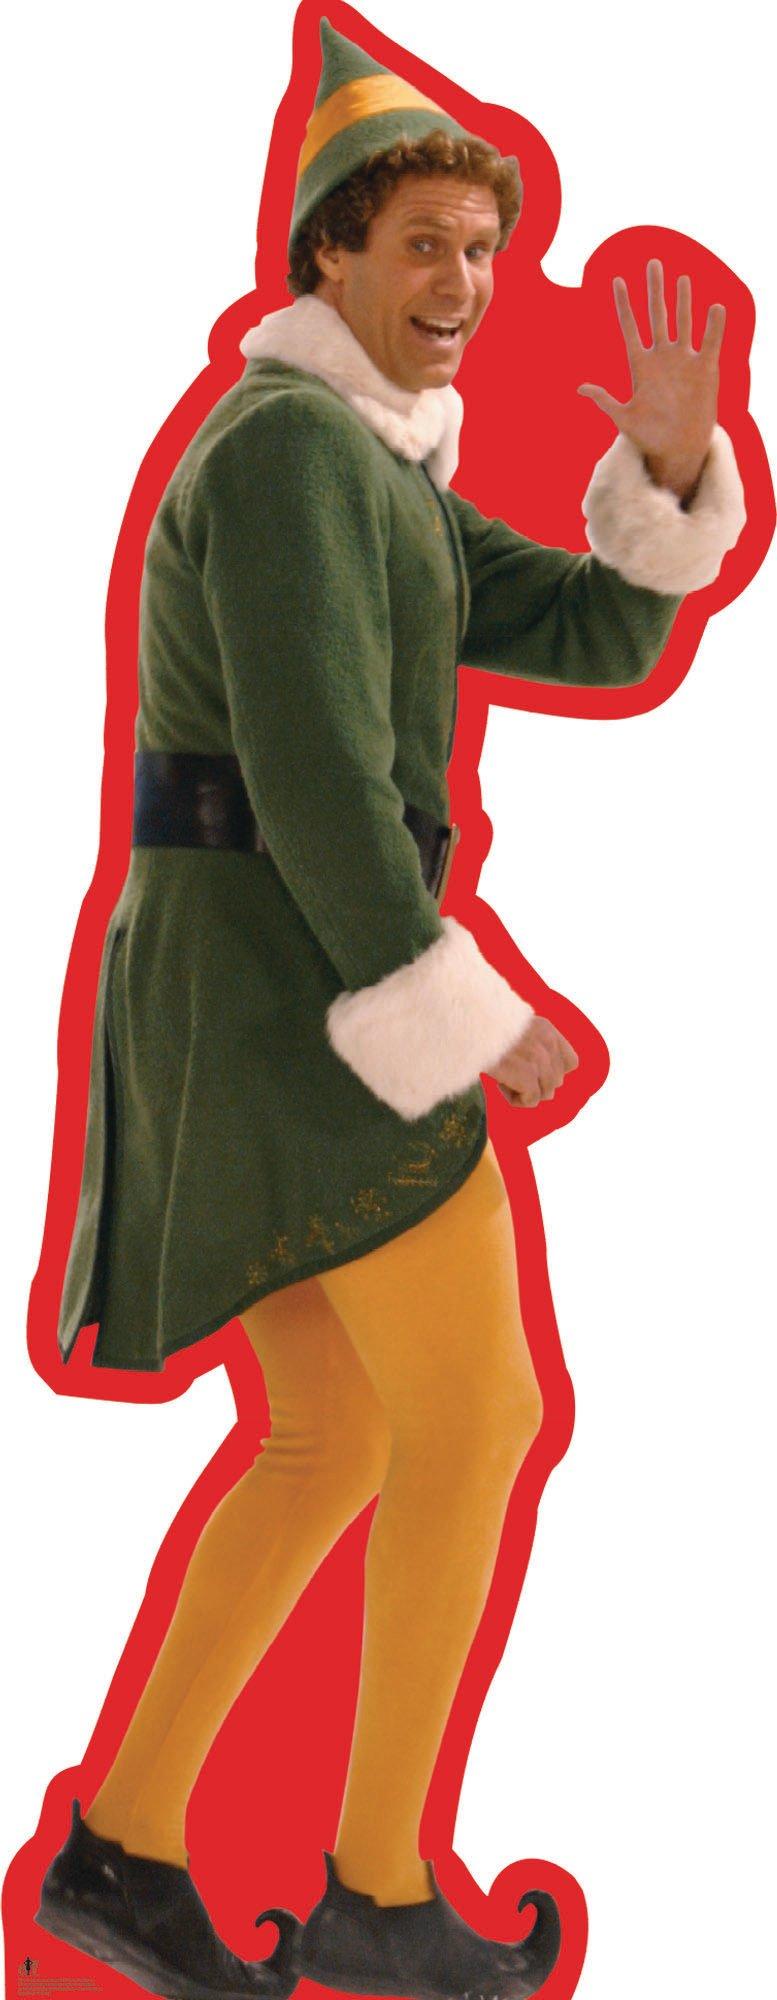 Buddy the Elf Pose 3 Life-Size Cardboard Cutout, 6ft - Elf